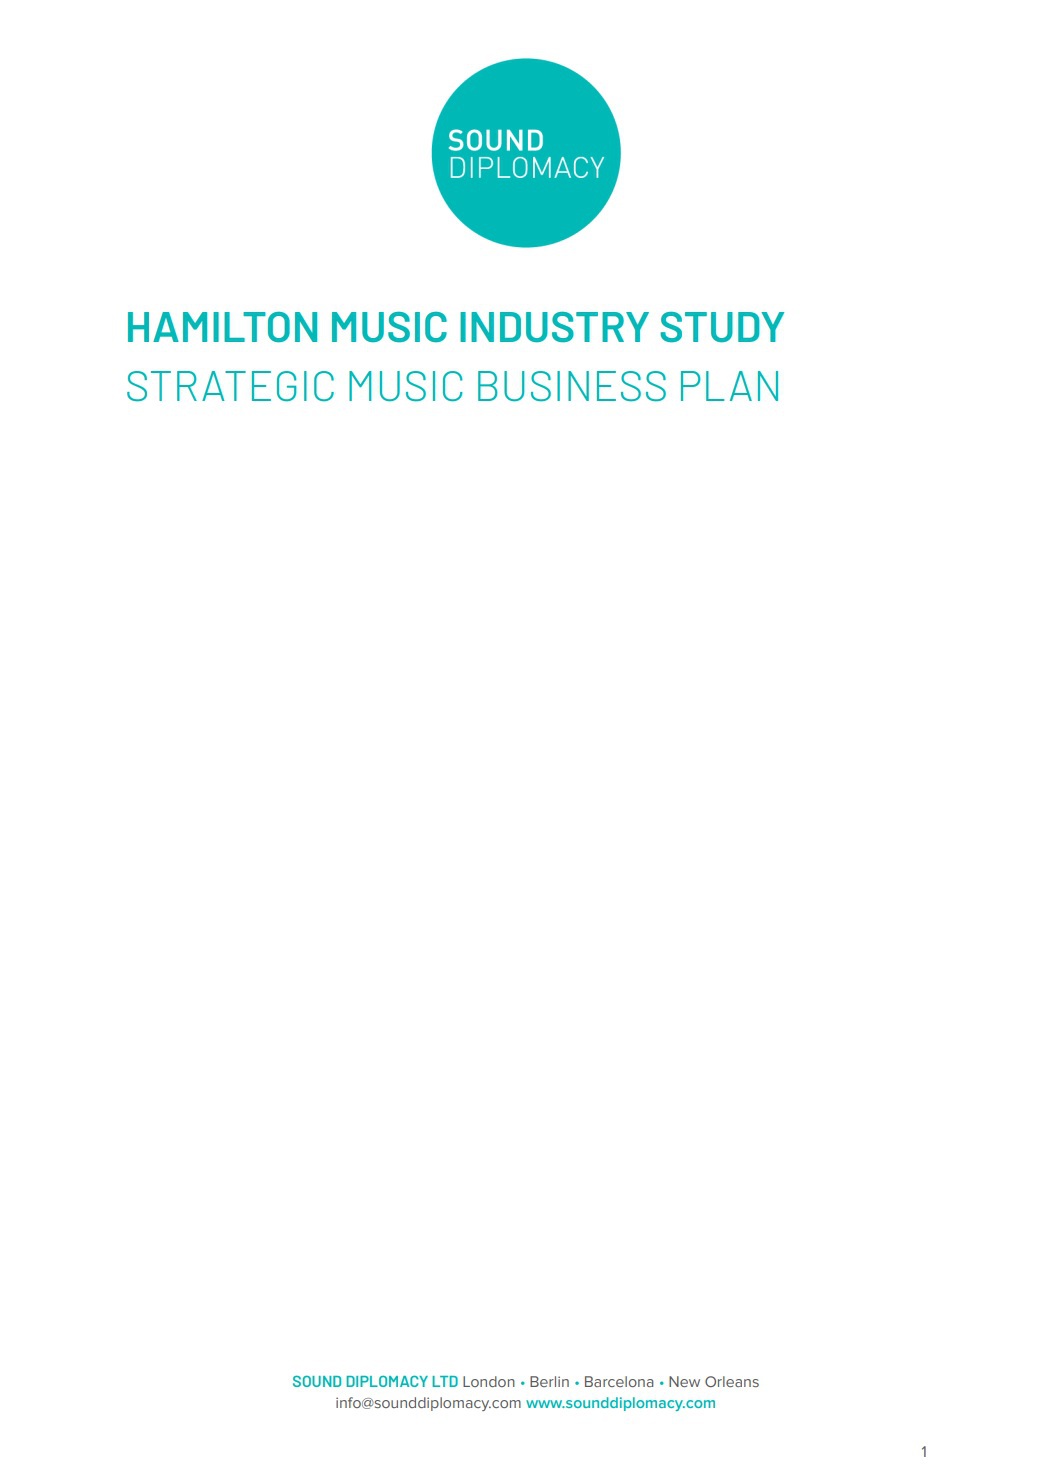 Hamilton Music Industry Study